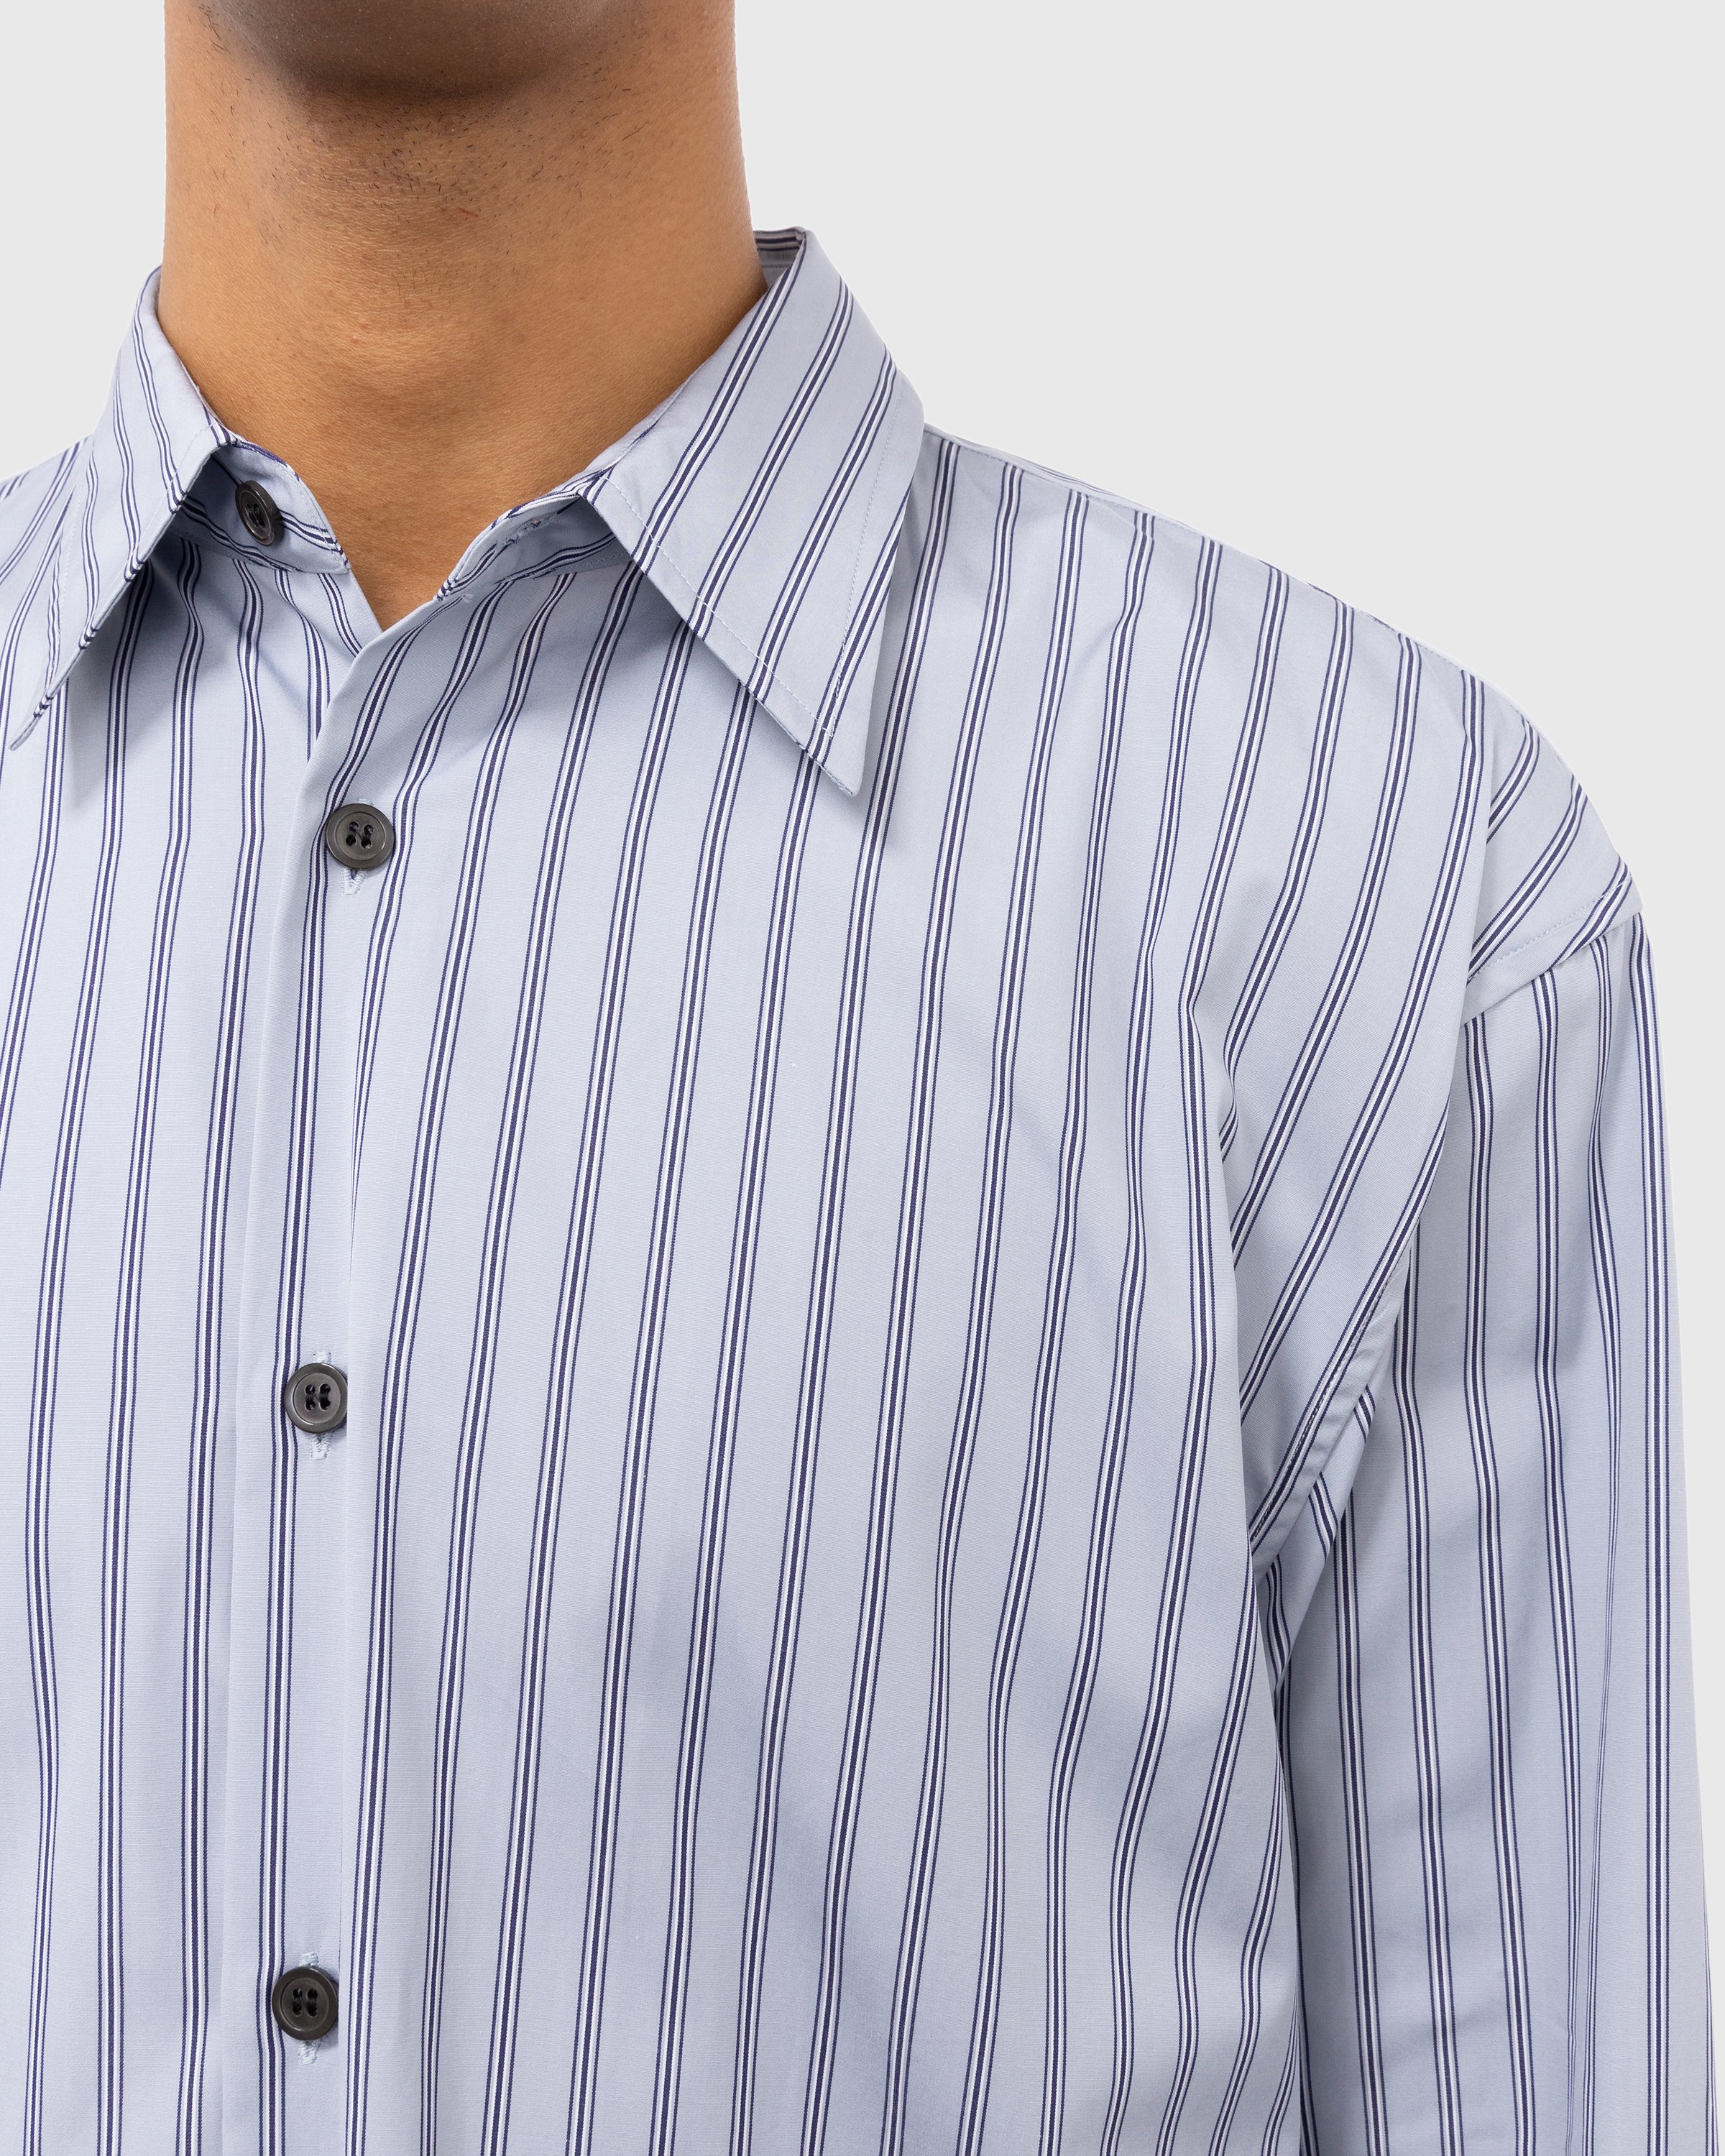 Dries van Noten - Croom Shirt Blue - Clothing - Blue - Image 5